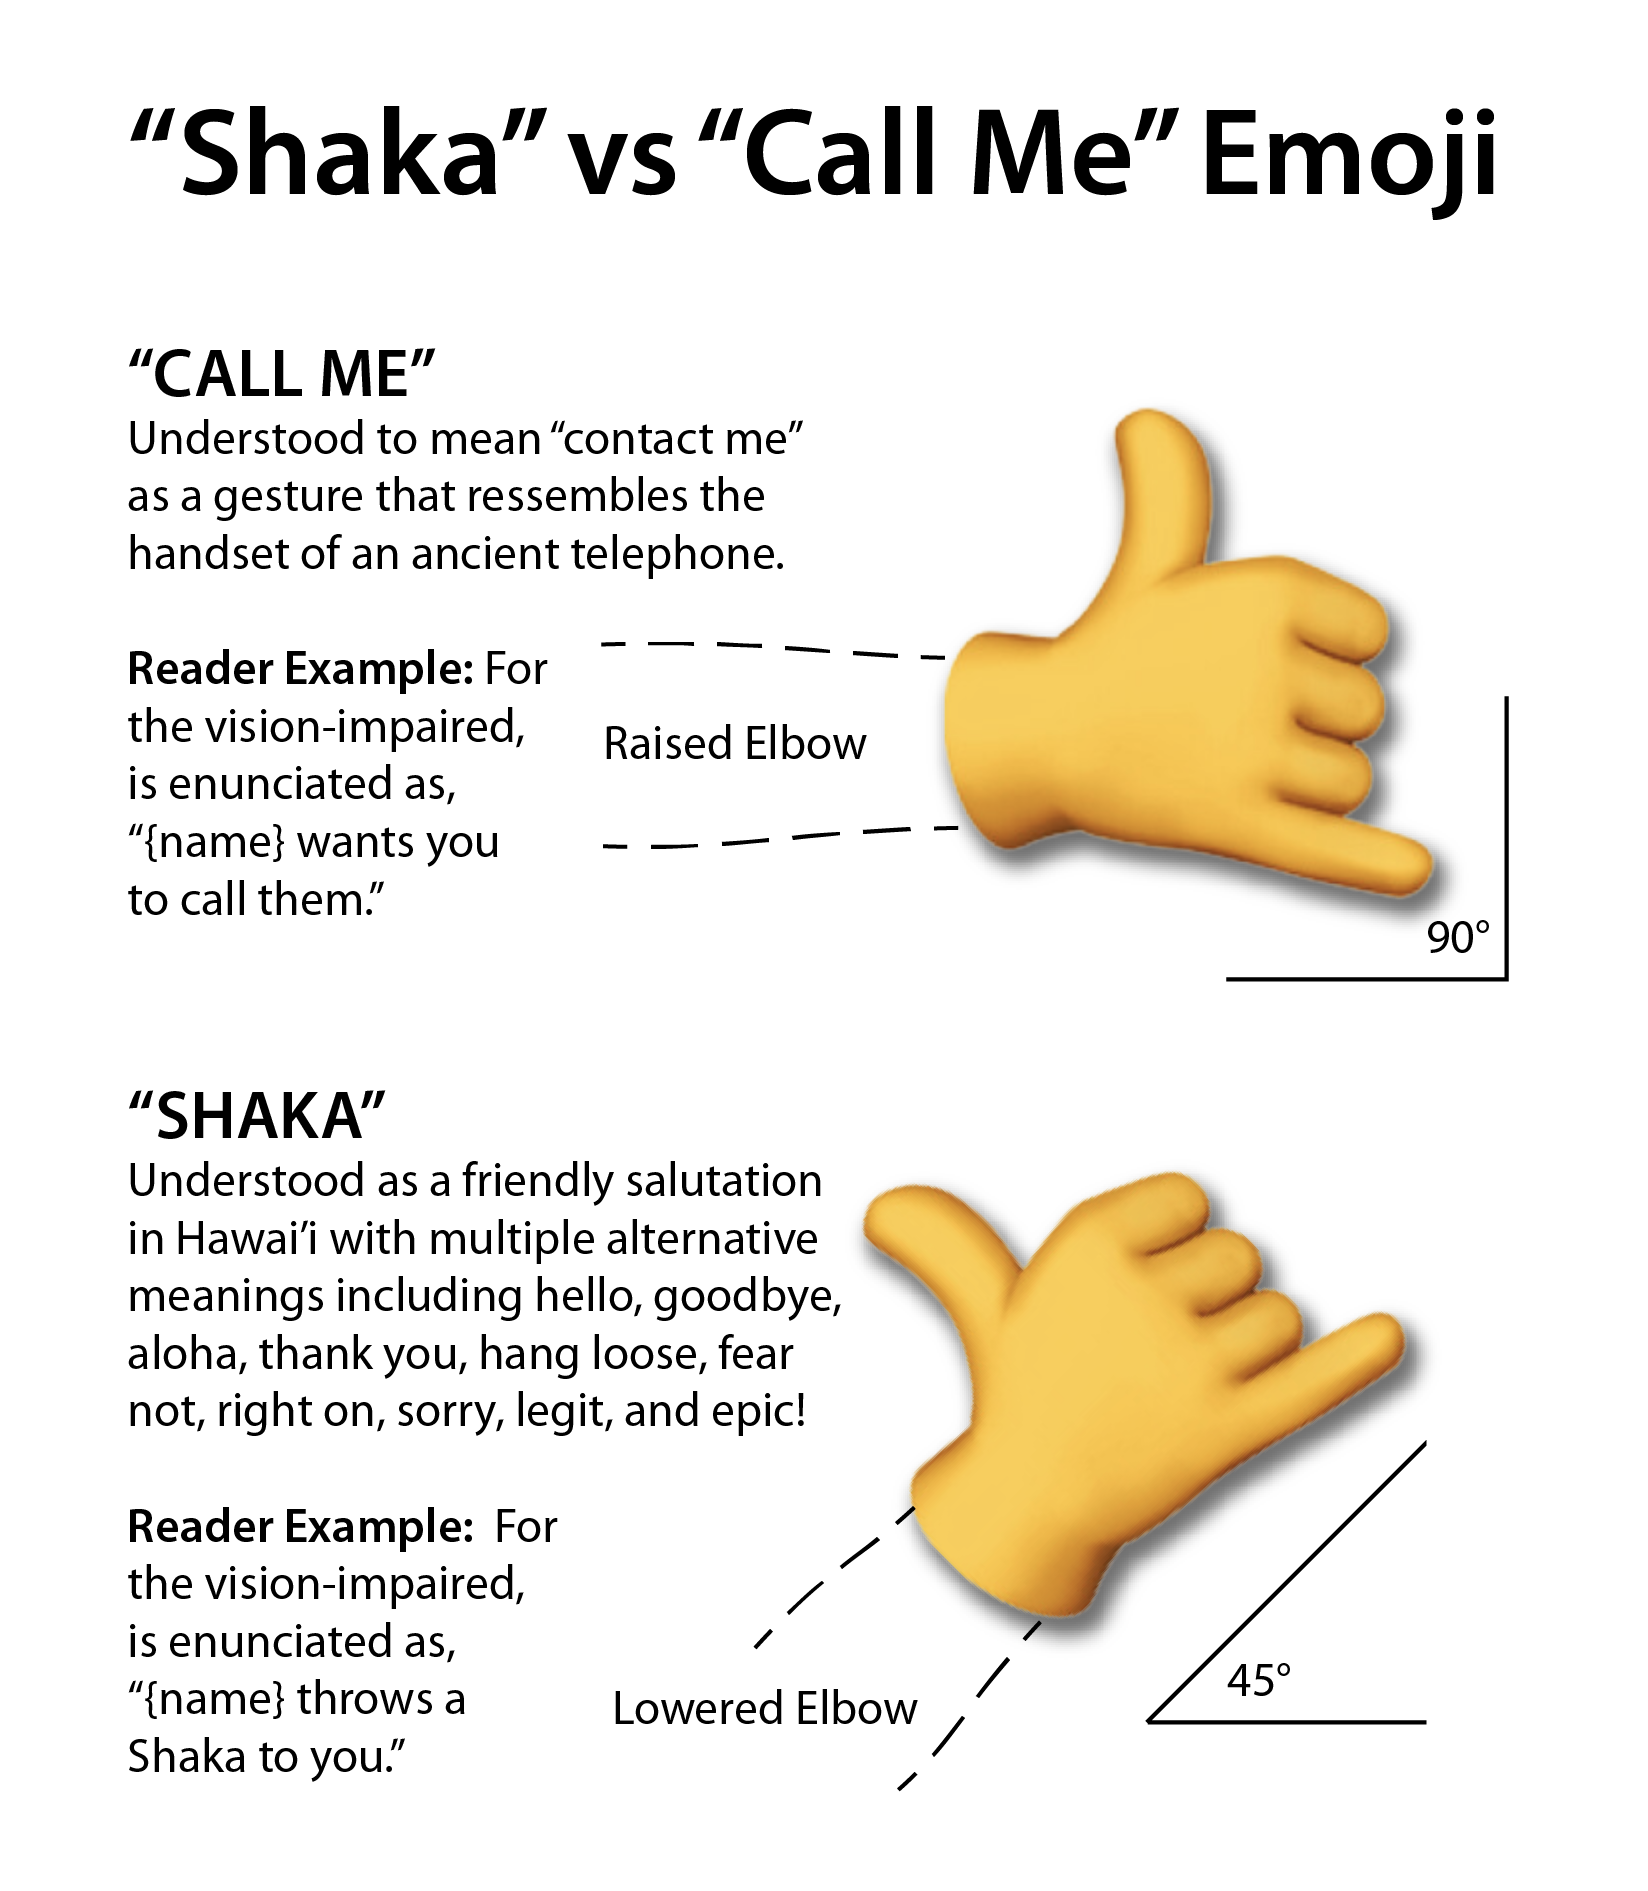 Shaka Emoji vs Call Me